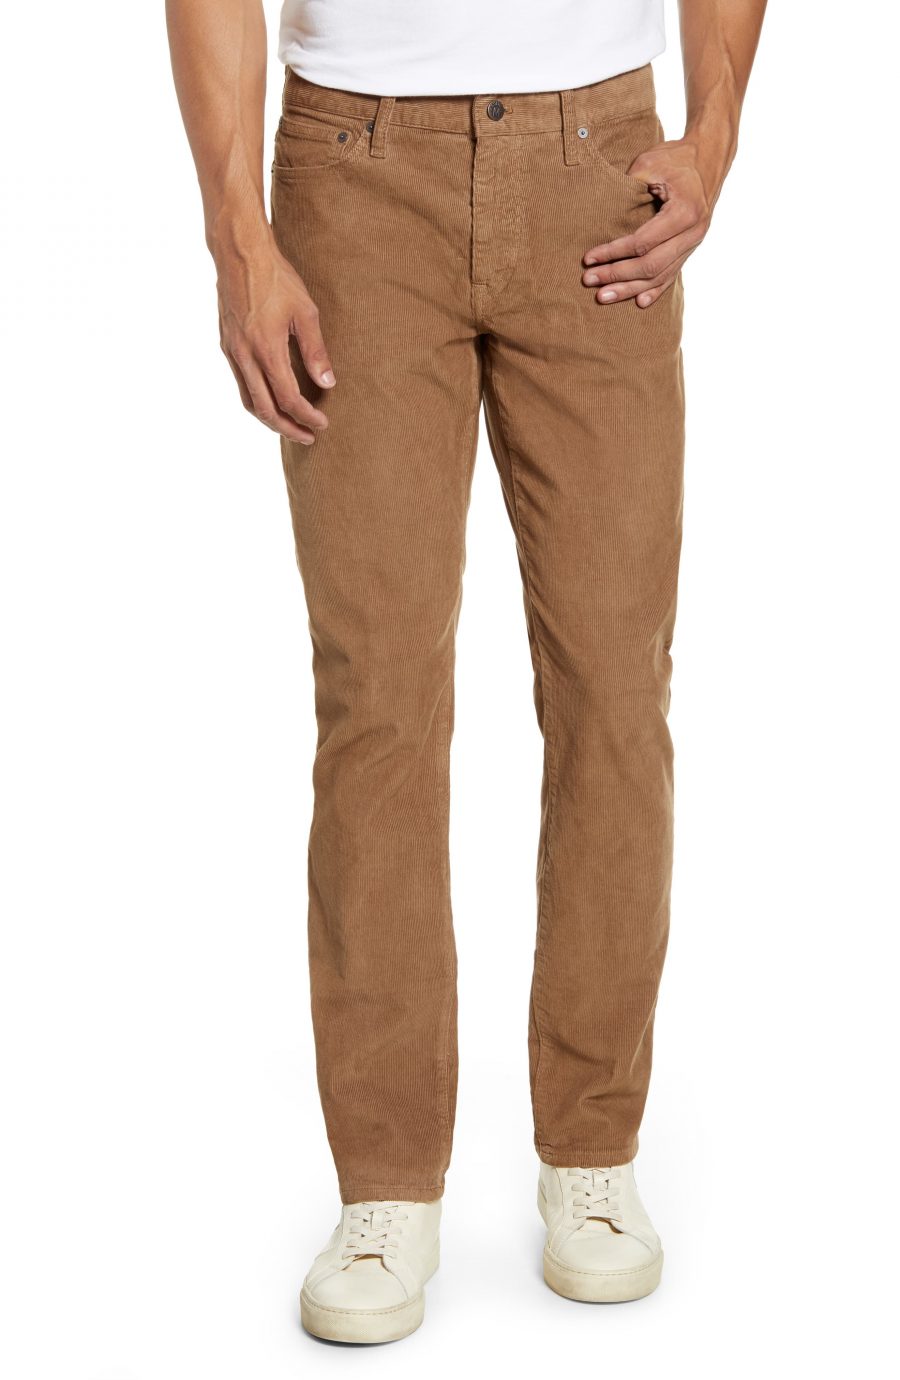 Men’s Madewell Corduroy Slim Jeans, Size 33 x 32 – Beige | The Fashionisto